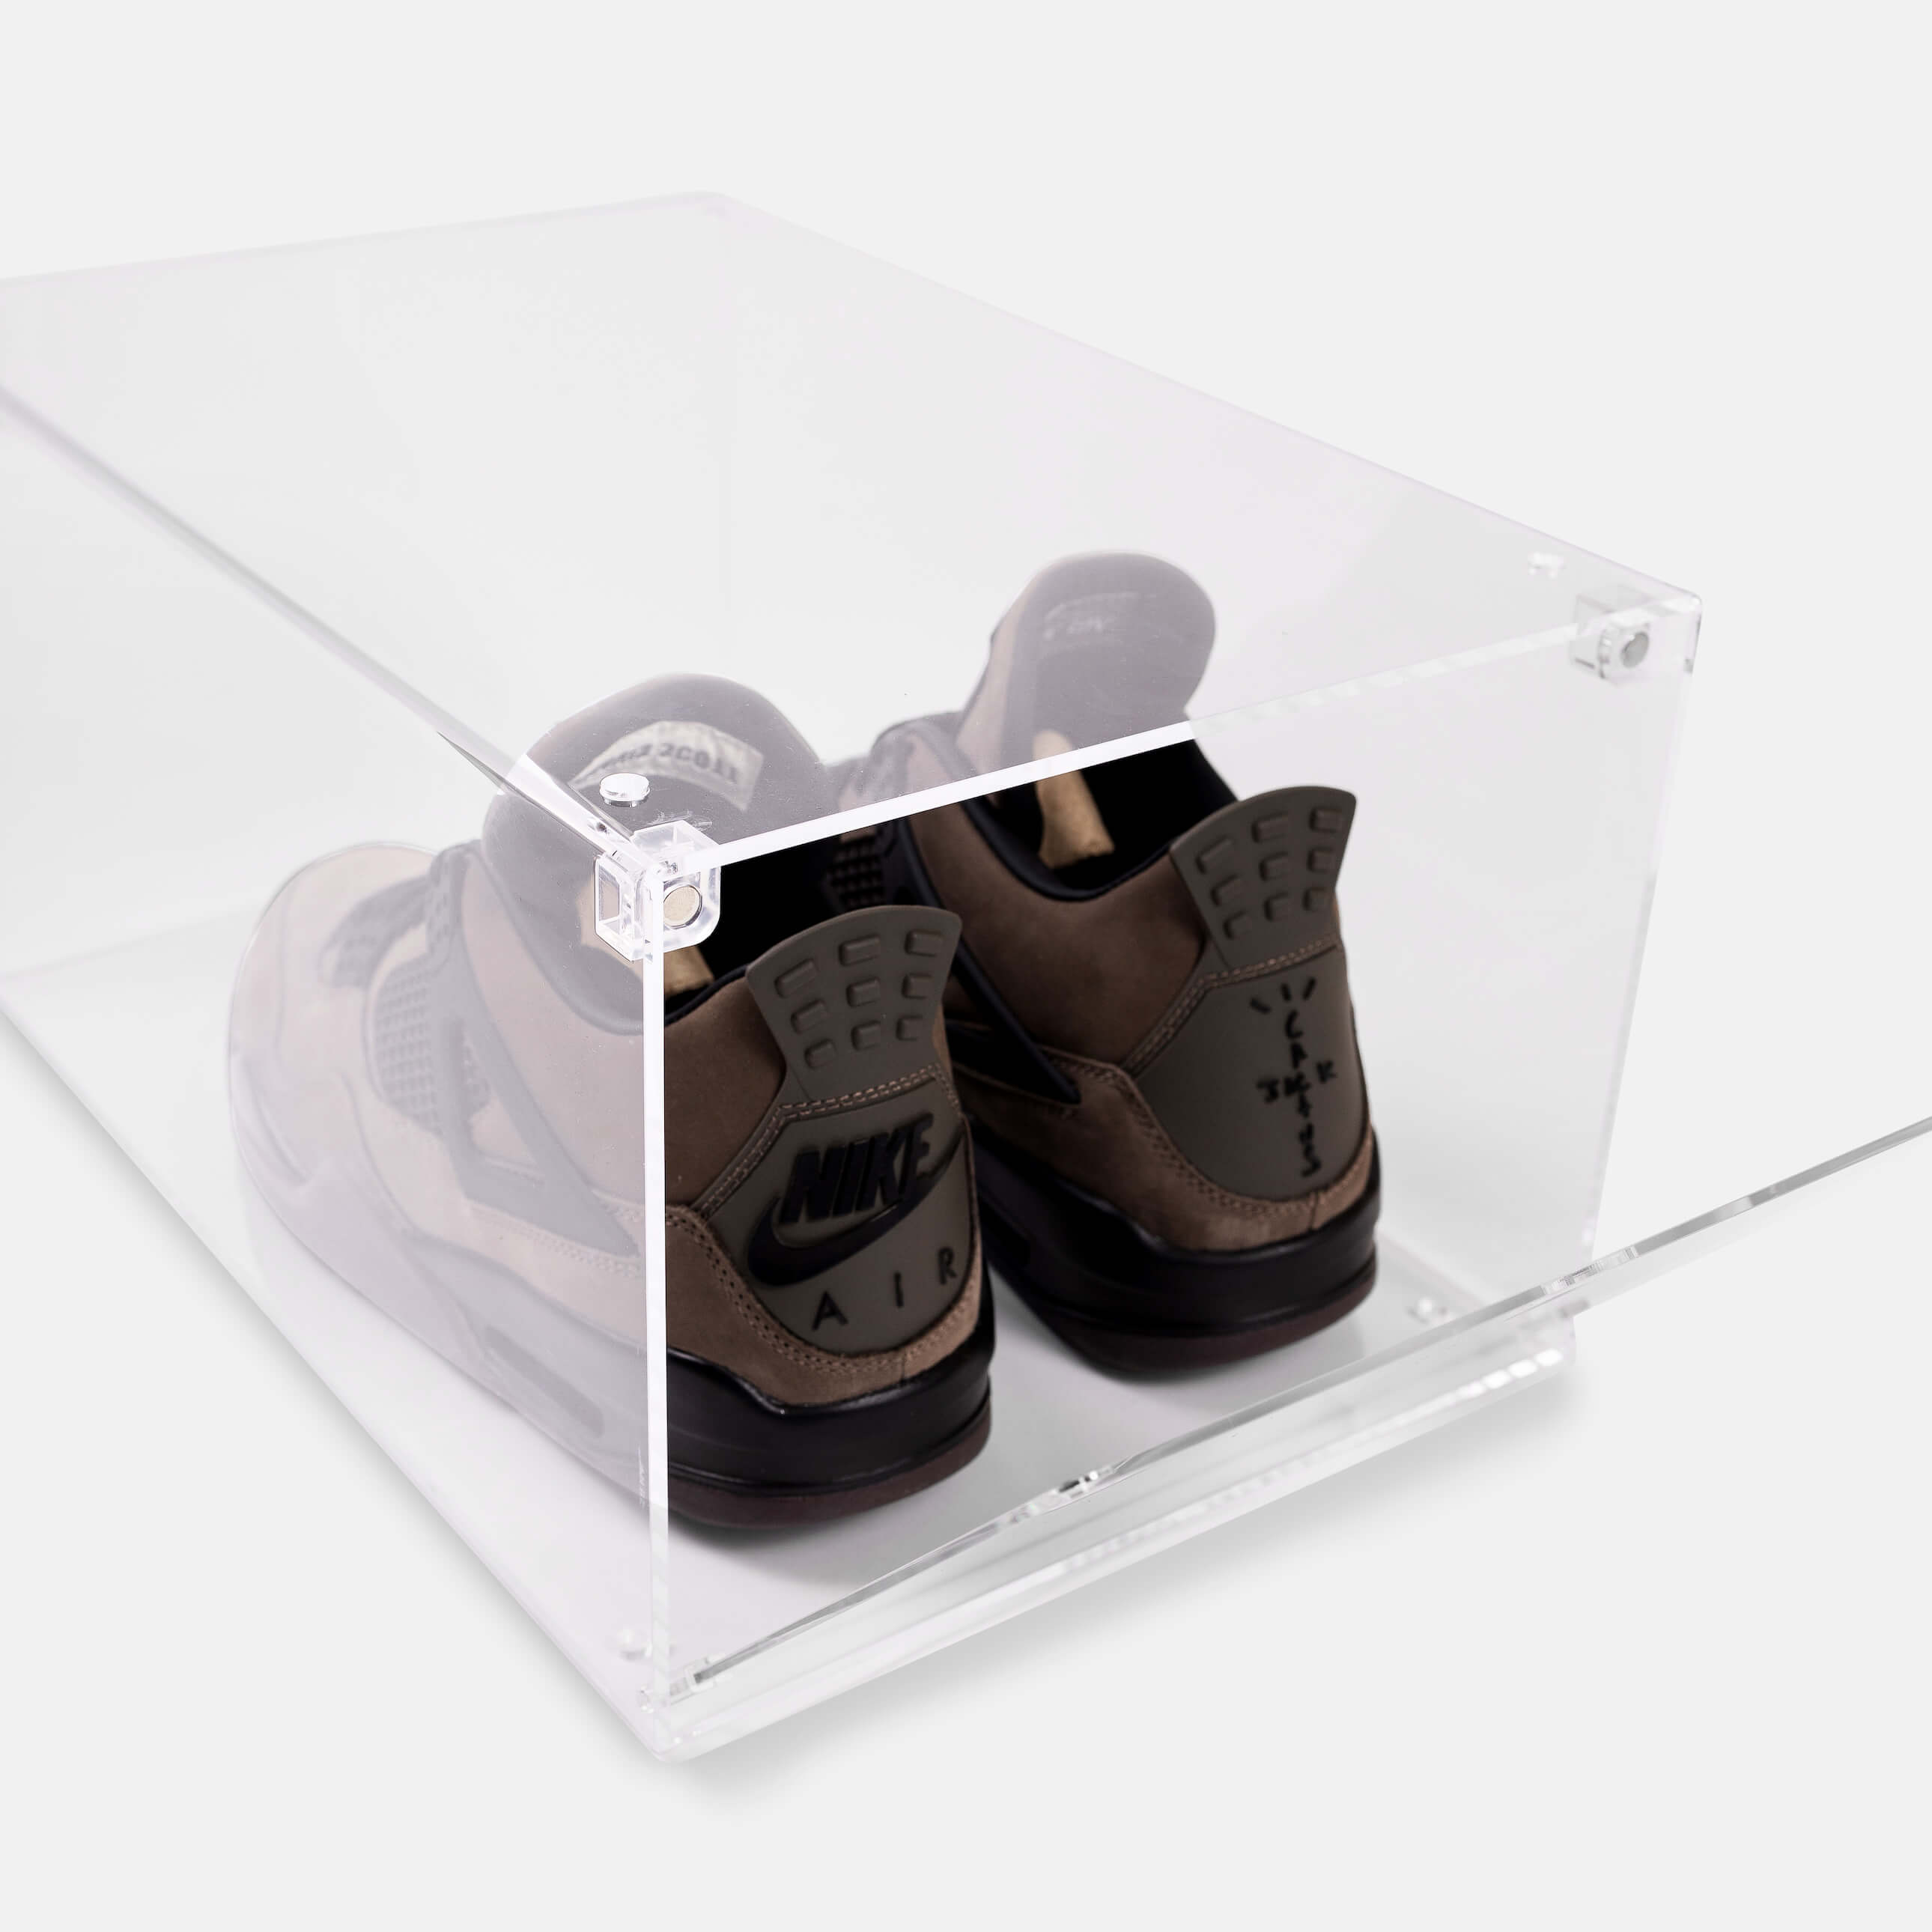 Looksee Designs - Premium Acrylic Shoe Display Case - Clear Shoe Boxes - Shoes Box Storage - Box Shoes - Shoe Boxes